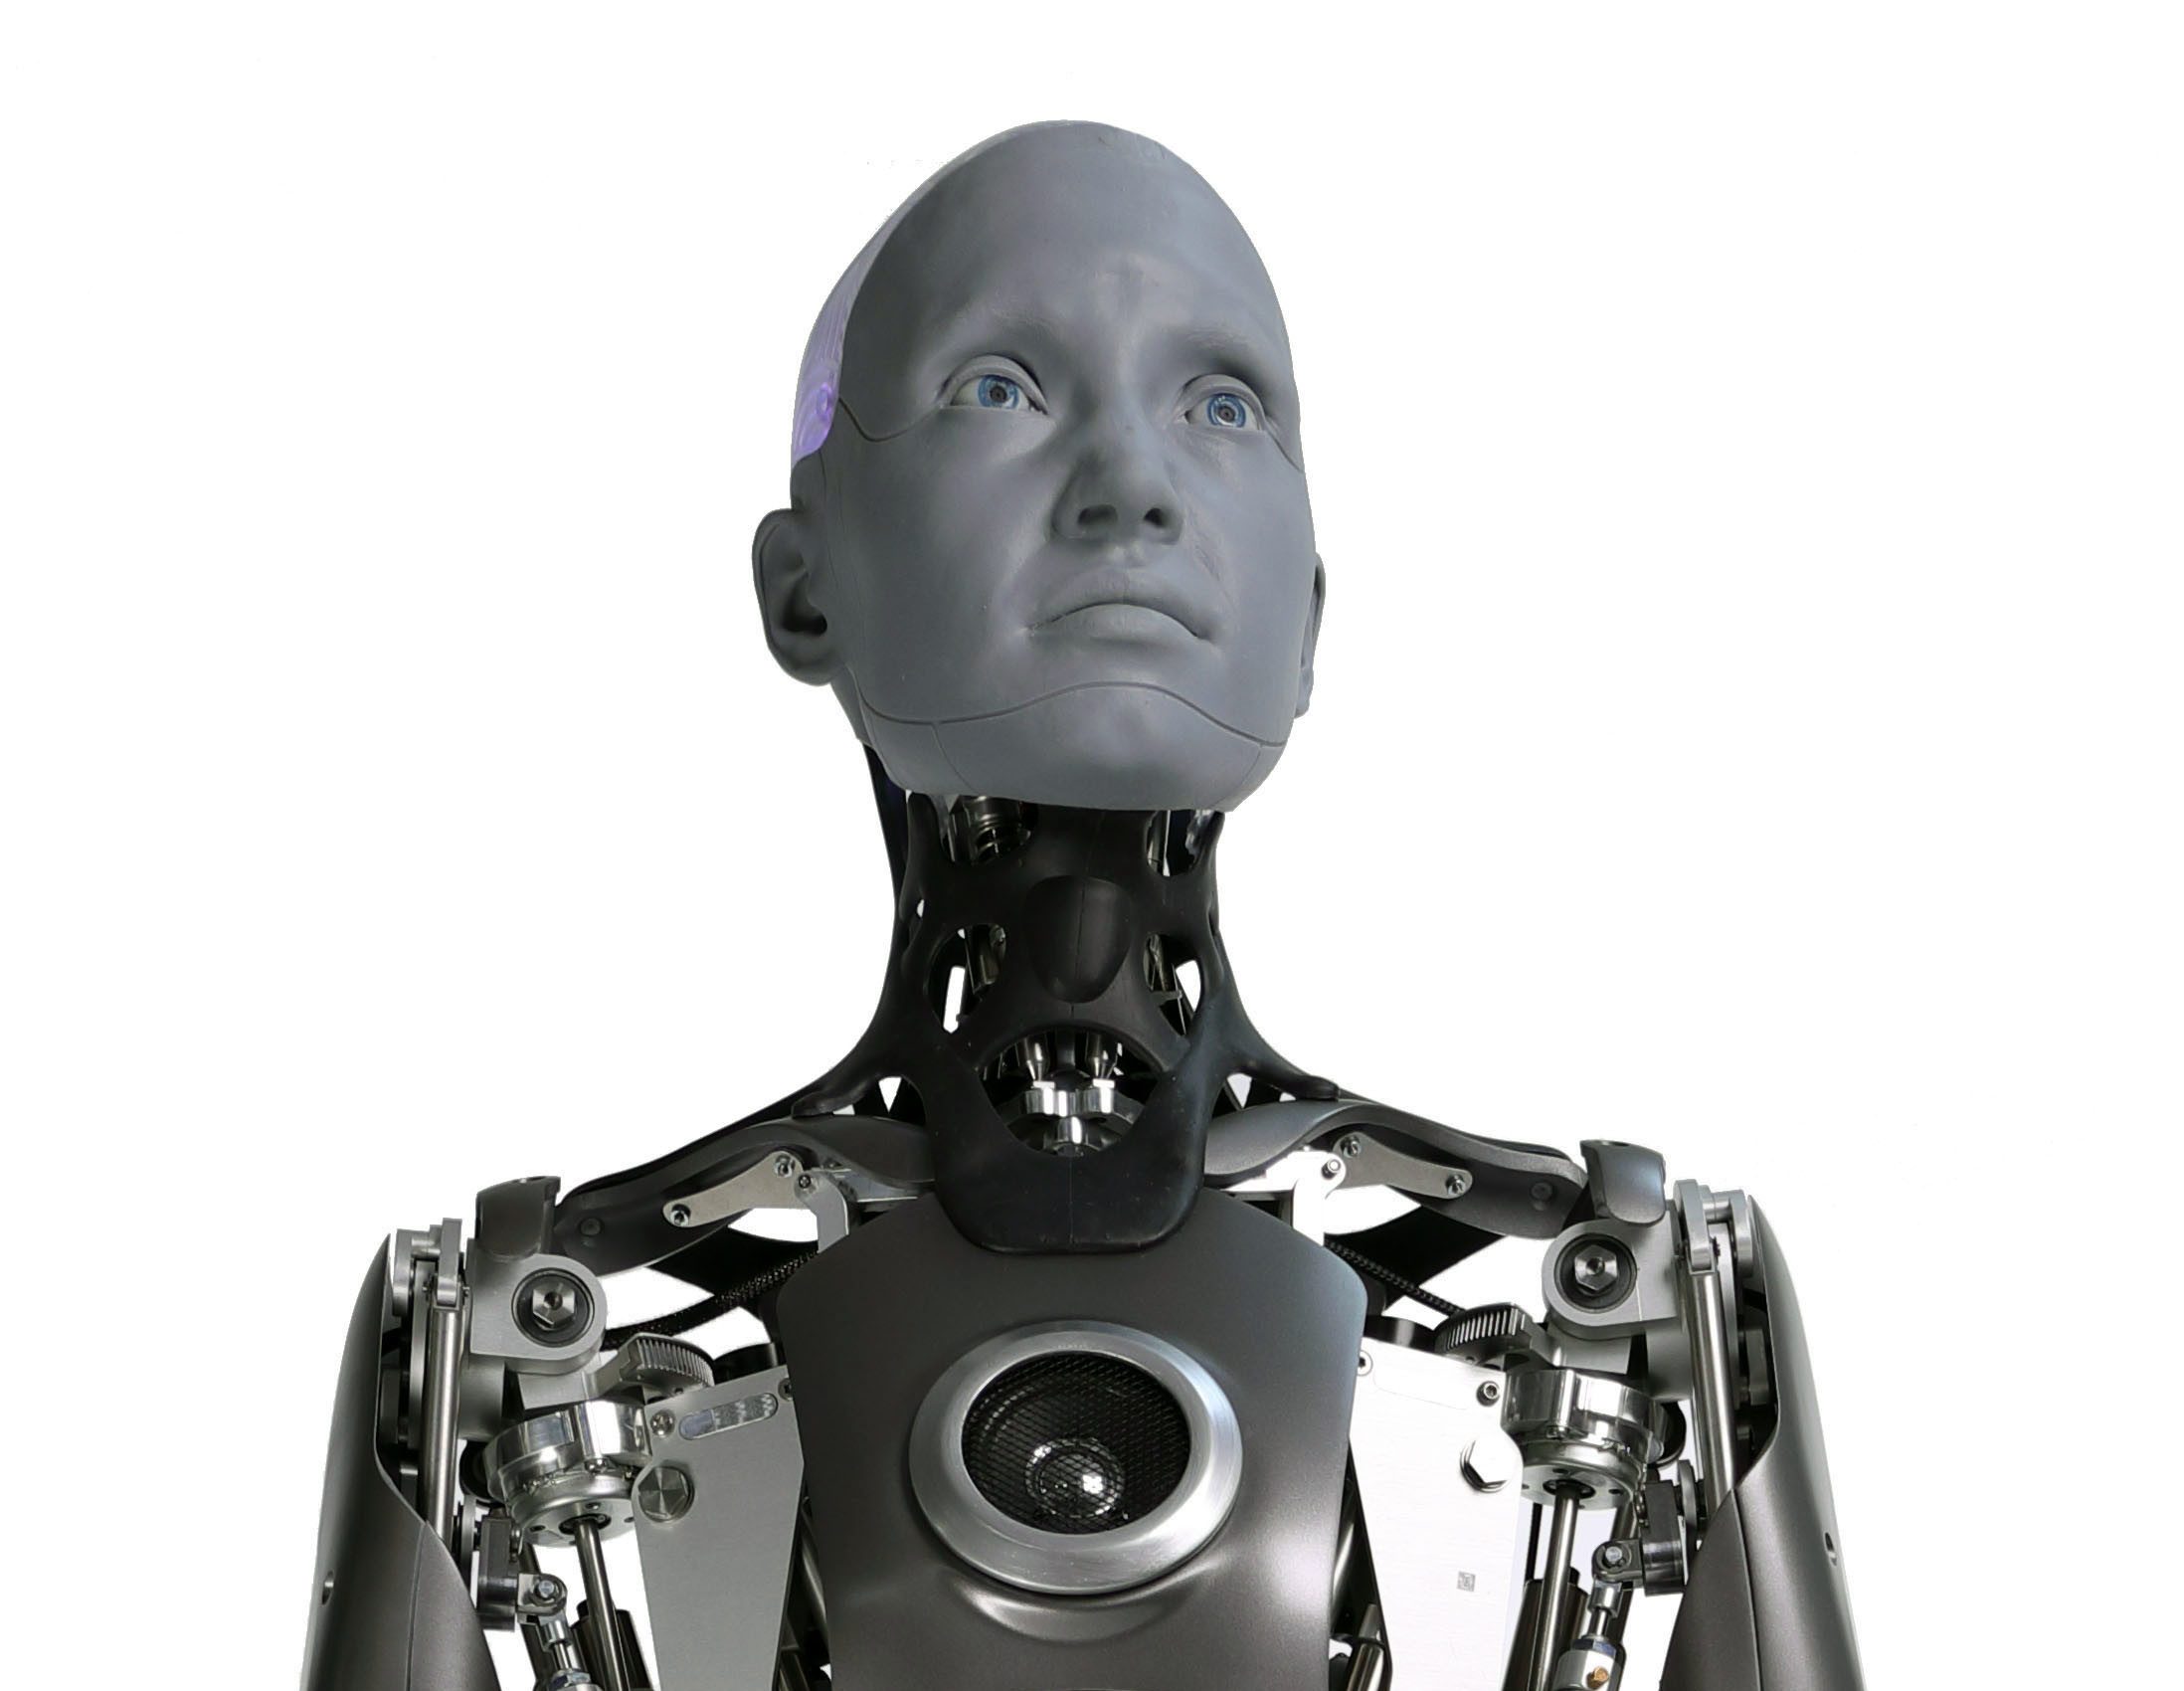 Engineered Arts Ameca Humanoid Robot at CES 2022